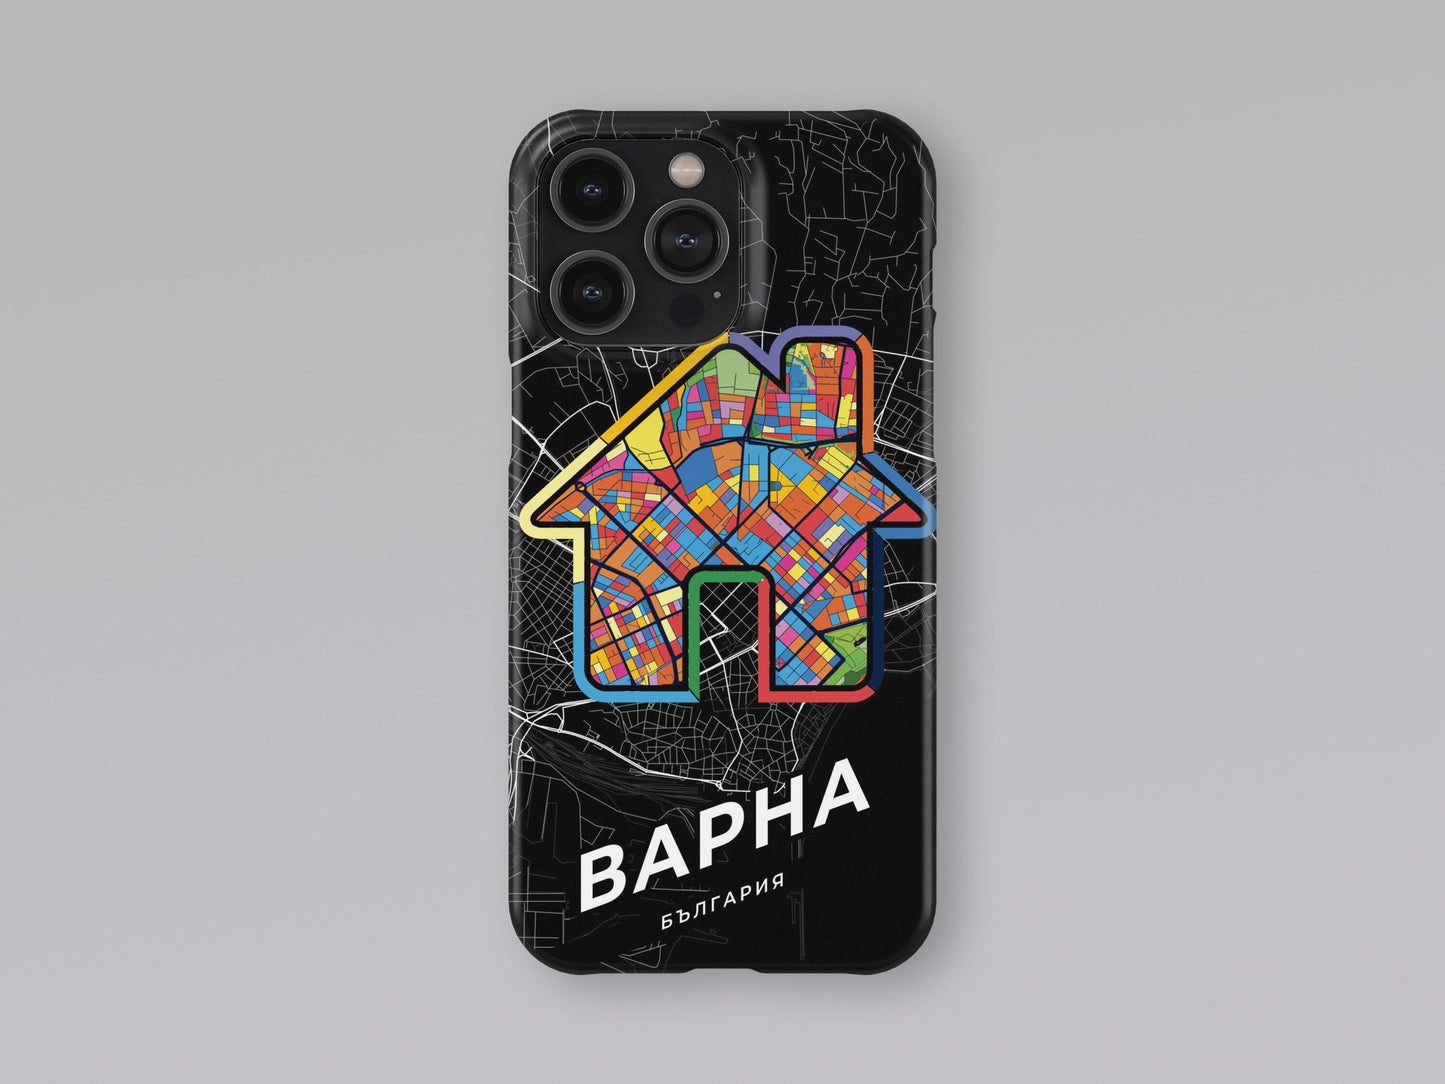 Варна България slim phone case with colorful icon. Birthday, wedding or housewarming gift. Couple match cases. 3